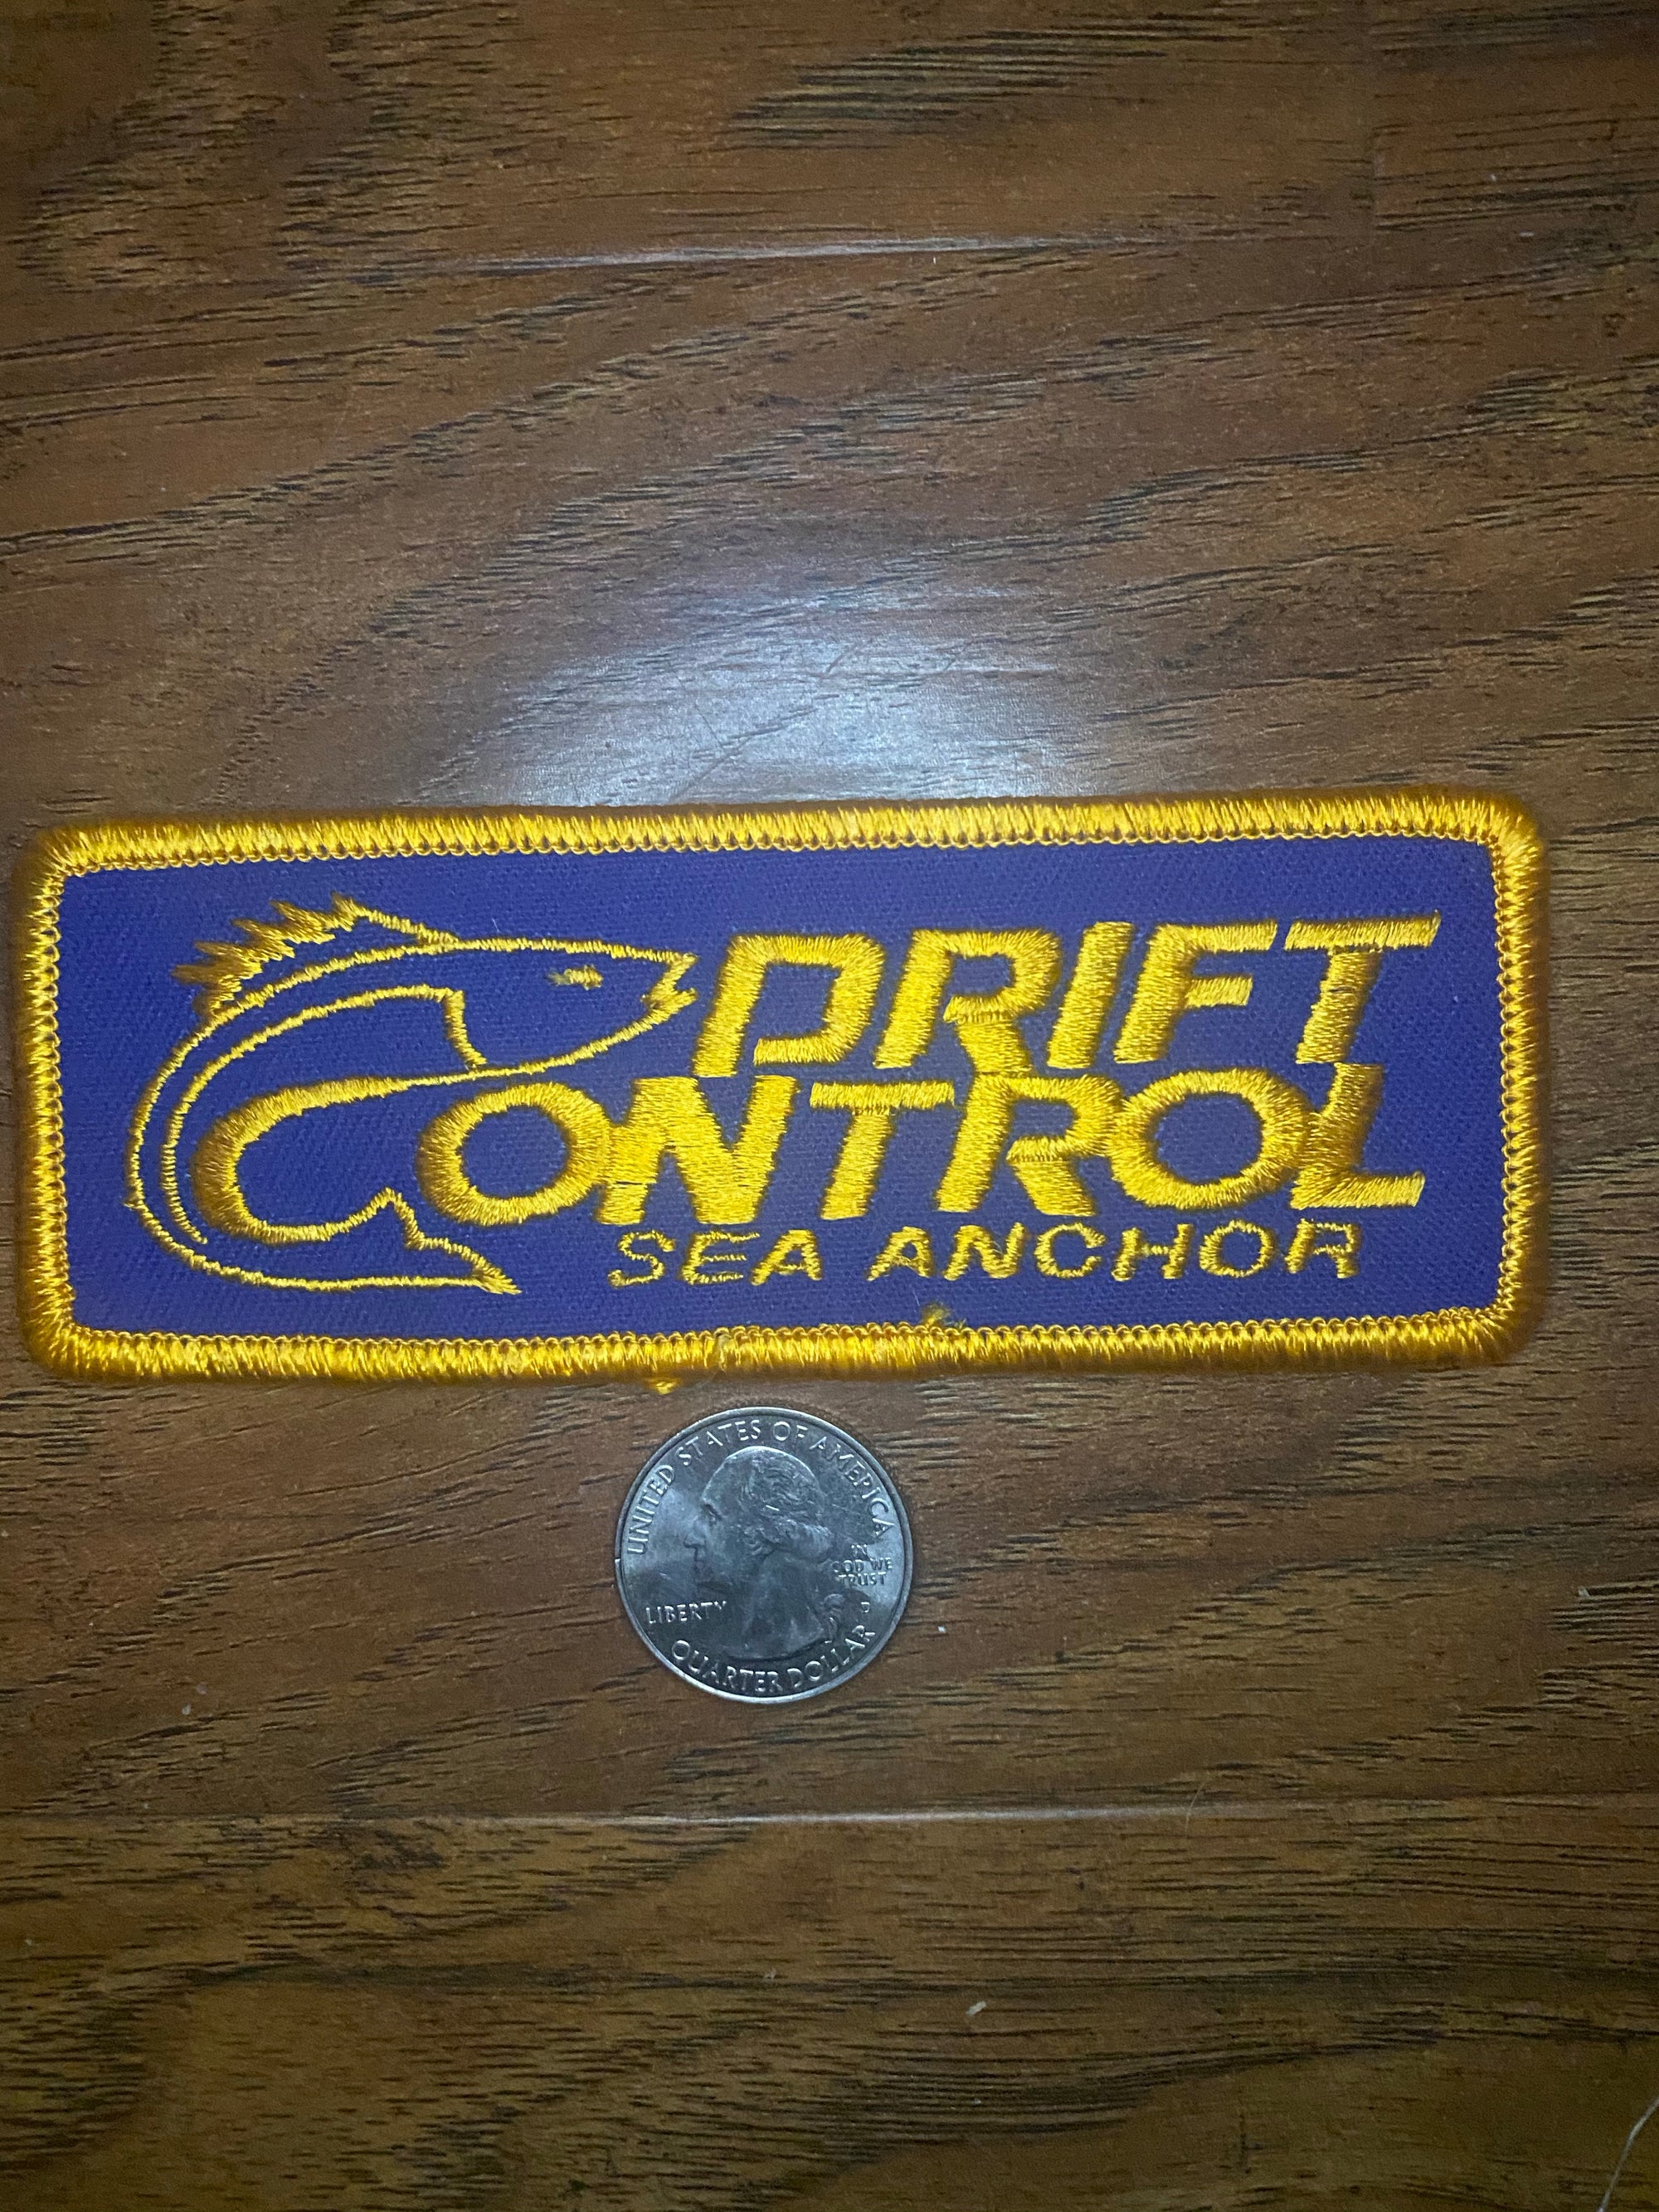 Vintage Drift Control Sea Anchor